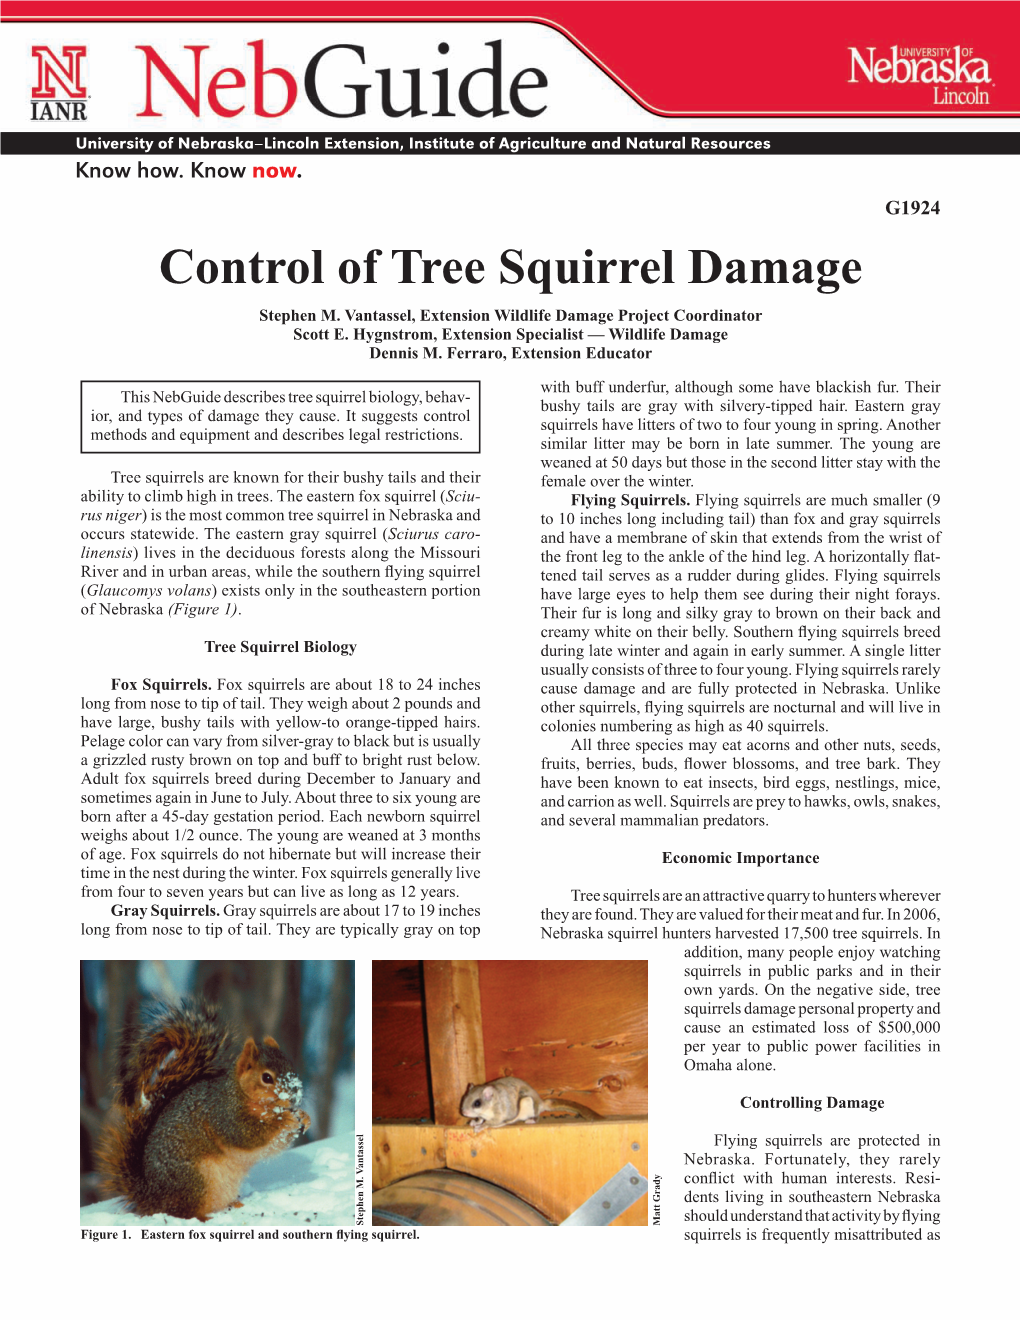 Control of Tree Squirrel Damage Stephen M